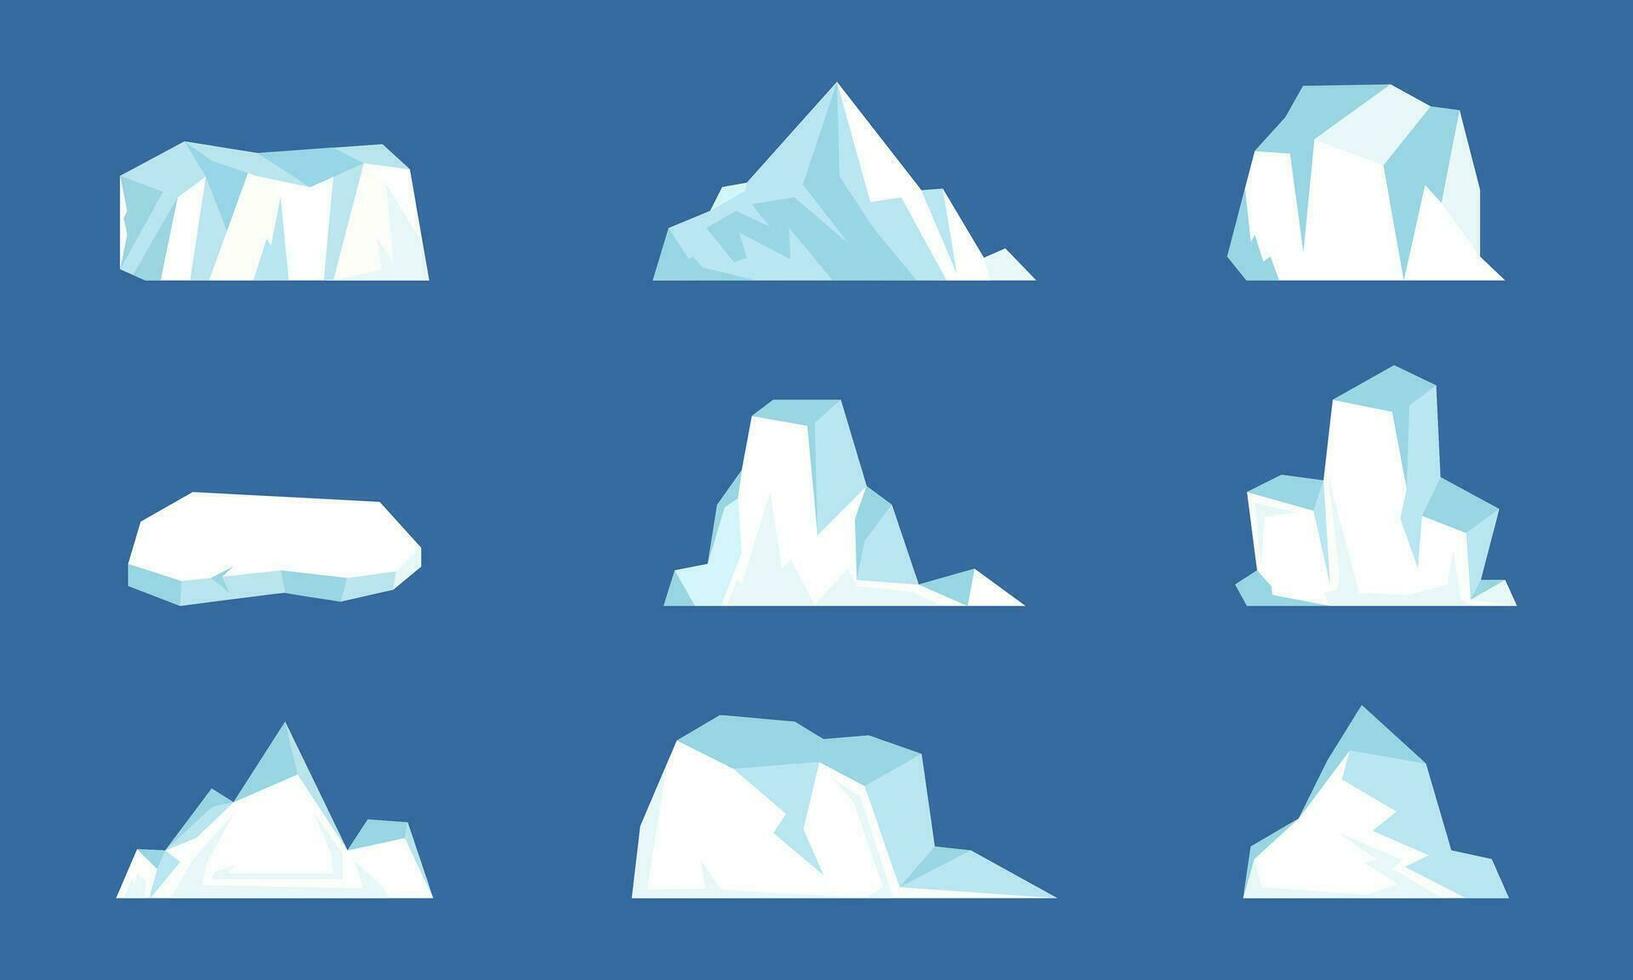 iceberg recopilación. flotante hielo montaña, dibujos animados glaciar en ártico Oceano agua o norte mar, congelado polar glacial fragmento derritiendo glacial rock cima. vector conjunto de hielo flotante iceberg ilustración